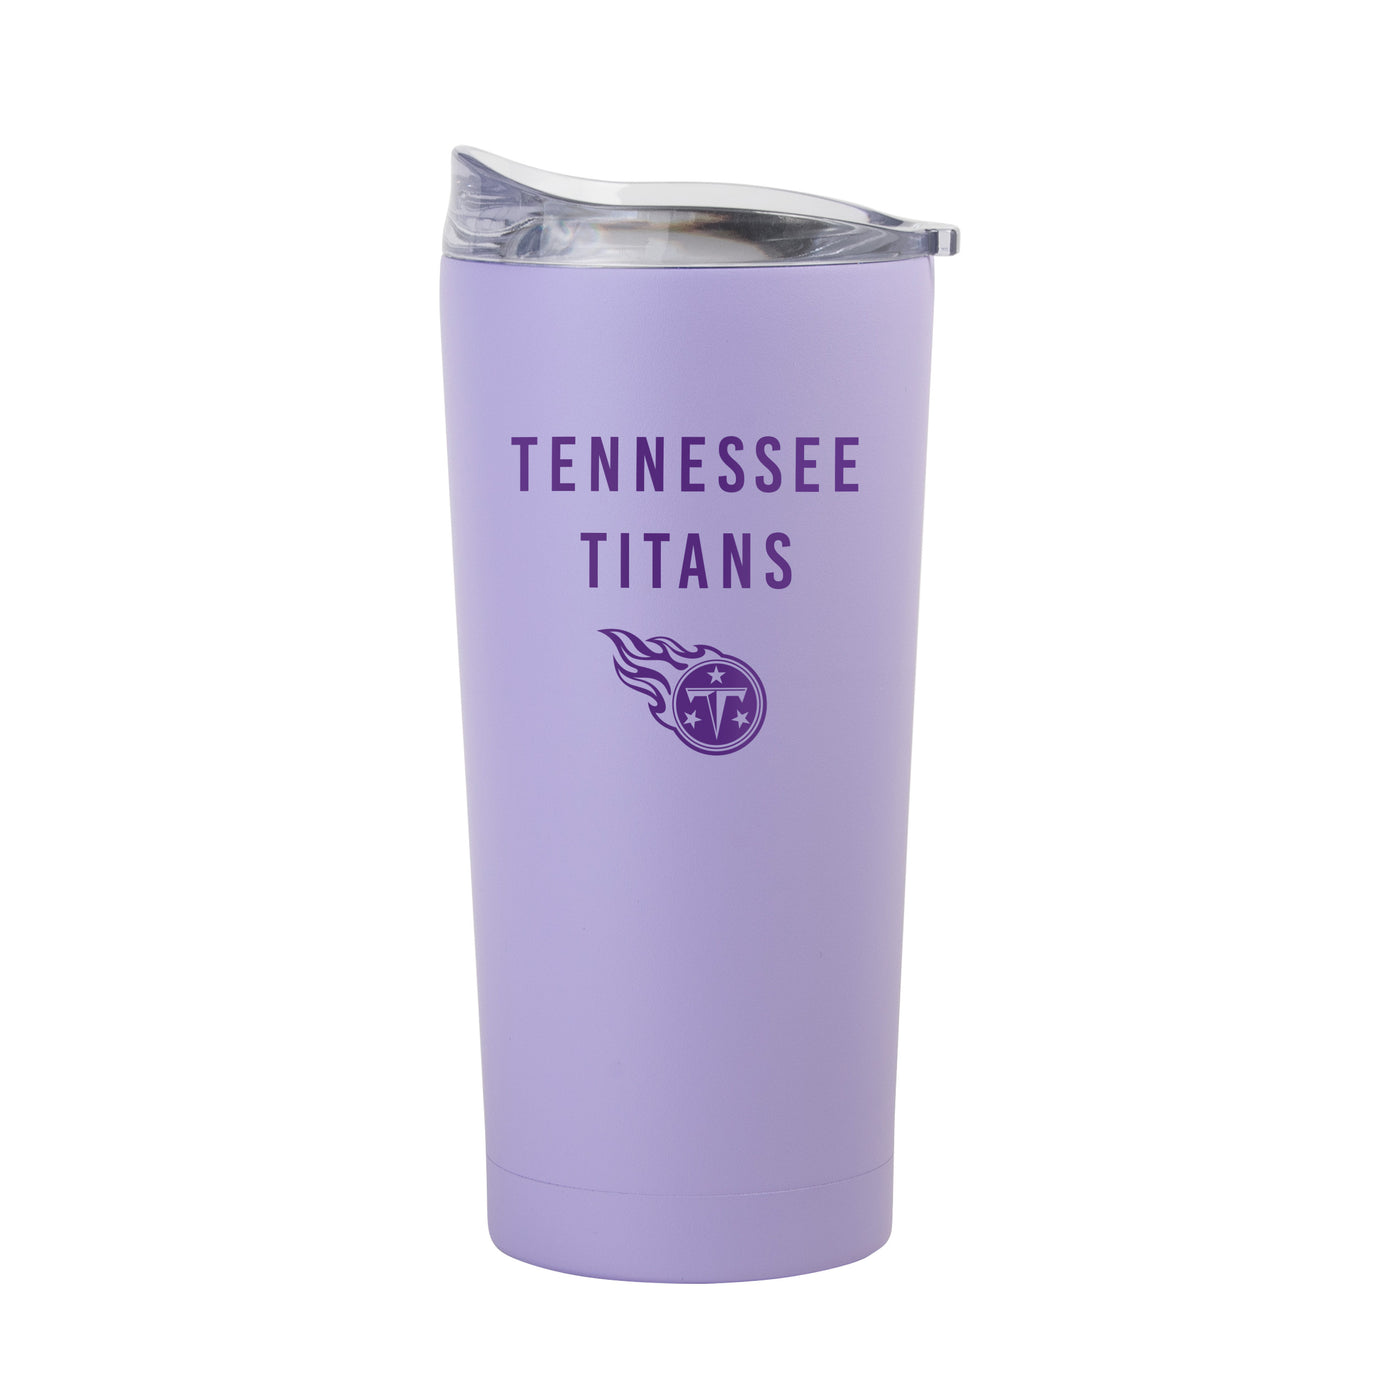 Tennessee Titans 20oz Tonal Lavender Powder Coat Tumbler